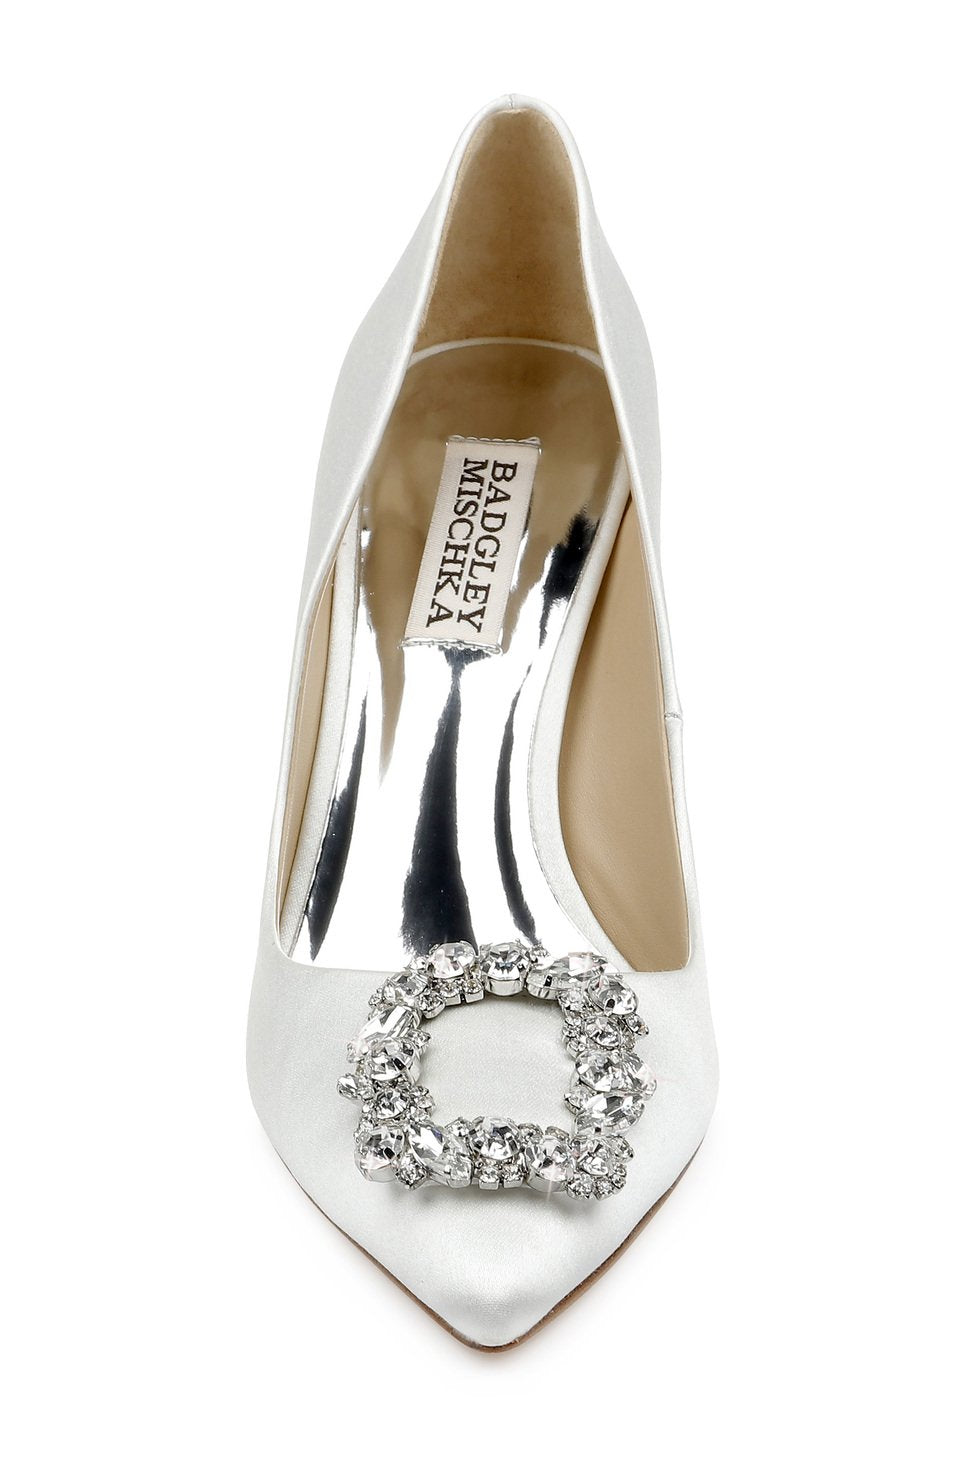 Badgley Mischka Cher Buckle Pointed Wedding Shoes - White